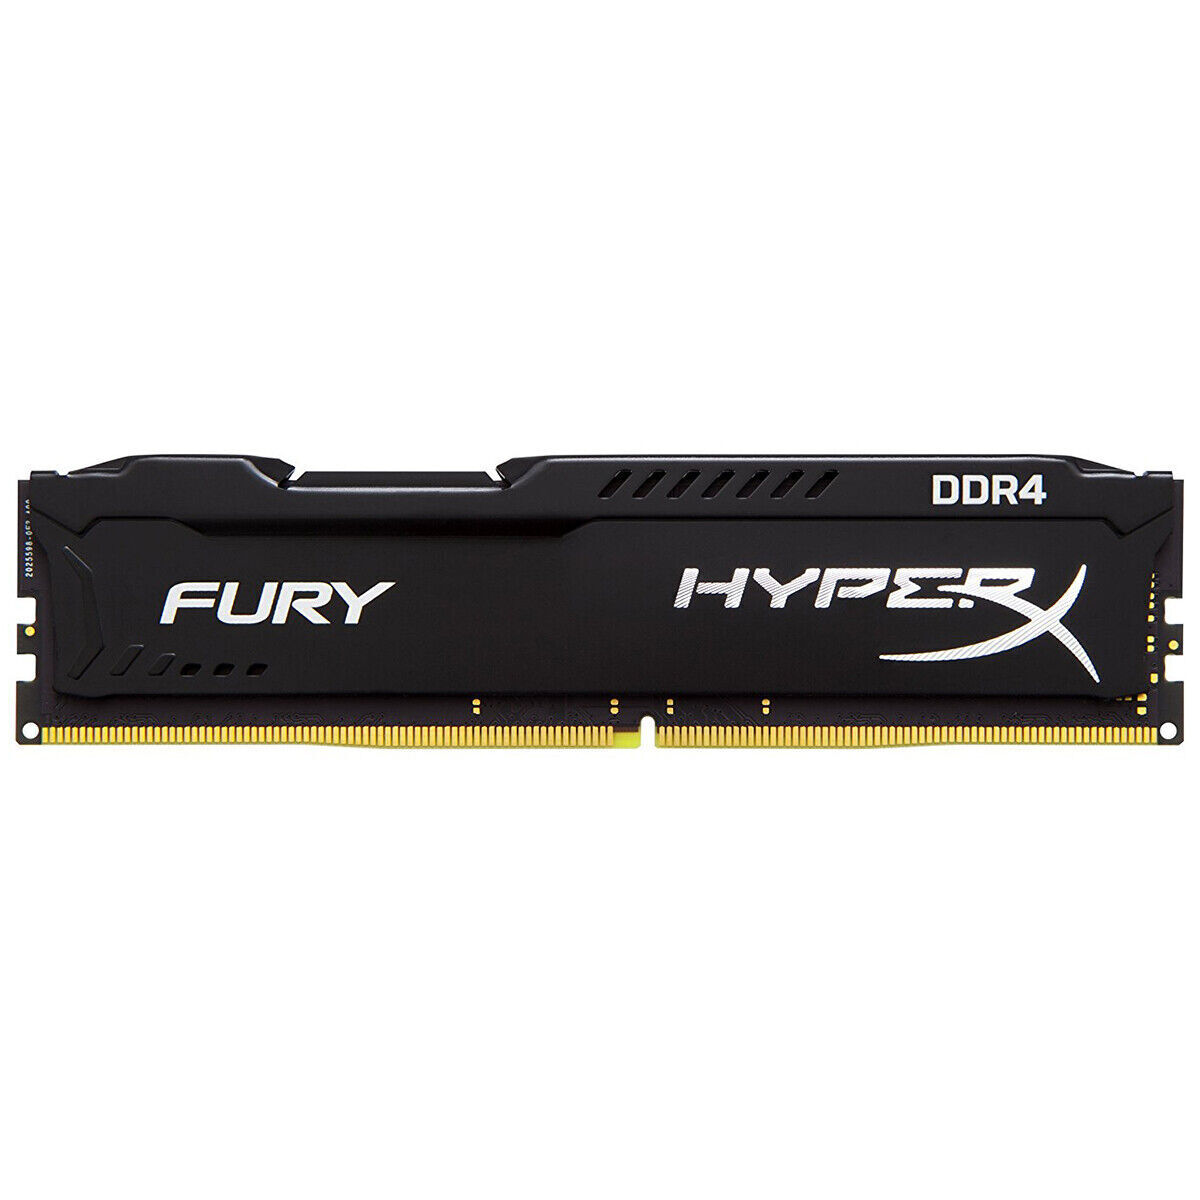 HyperX FURY DDR4 8GB 16GB 4GB 32GB 3200MHz PC4-25600 Desktop Memory DIMM 288